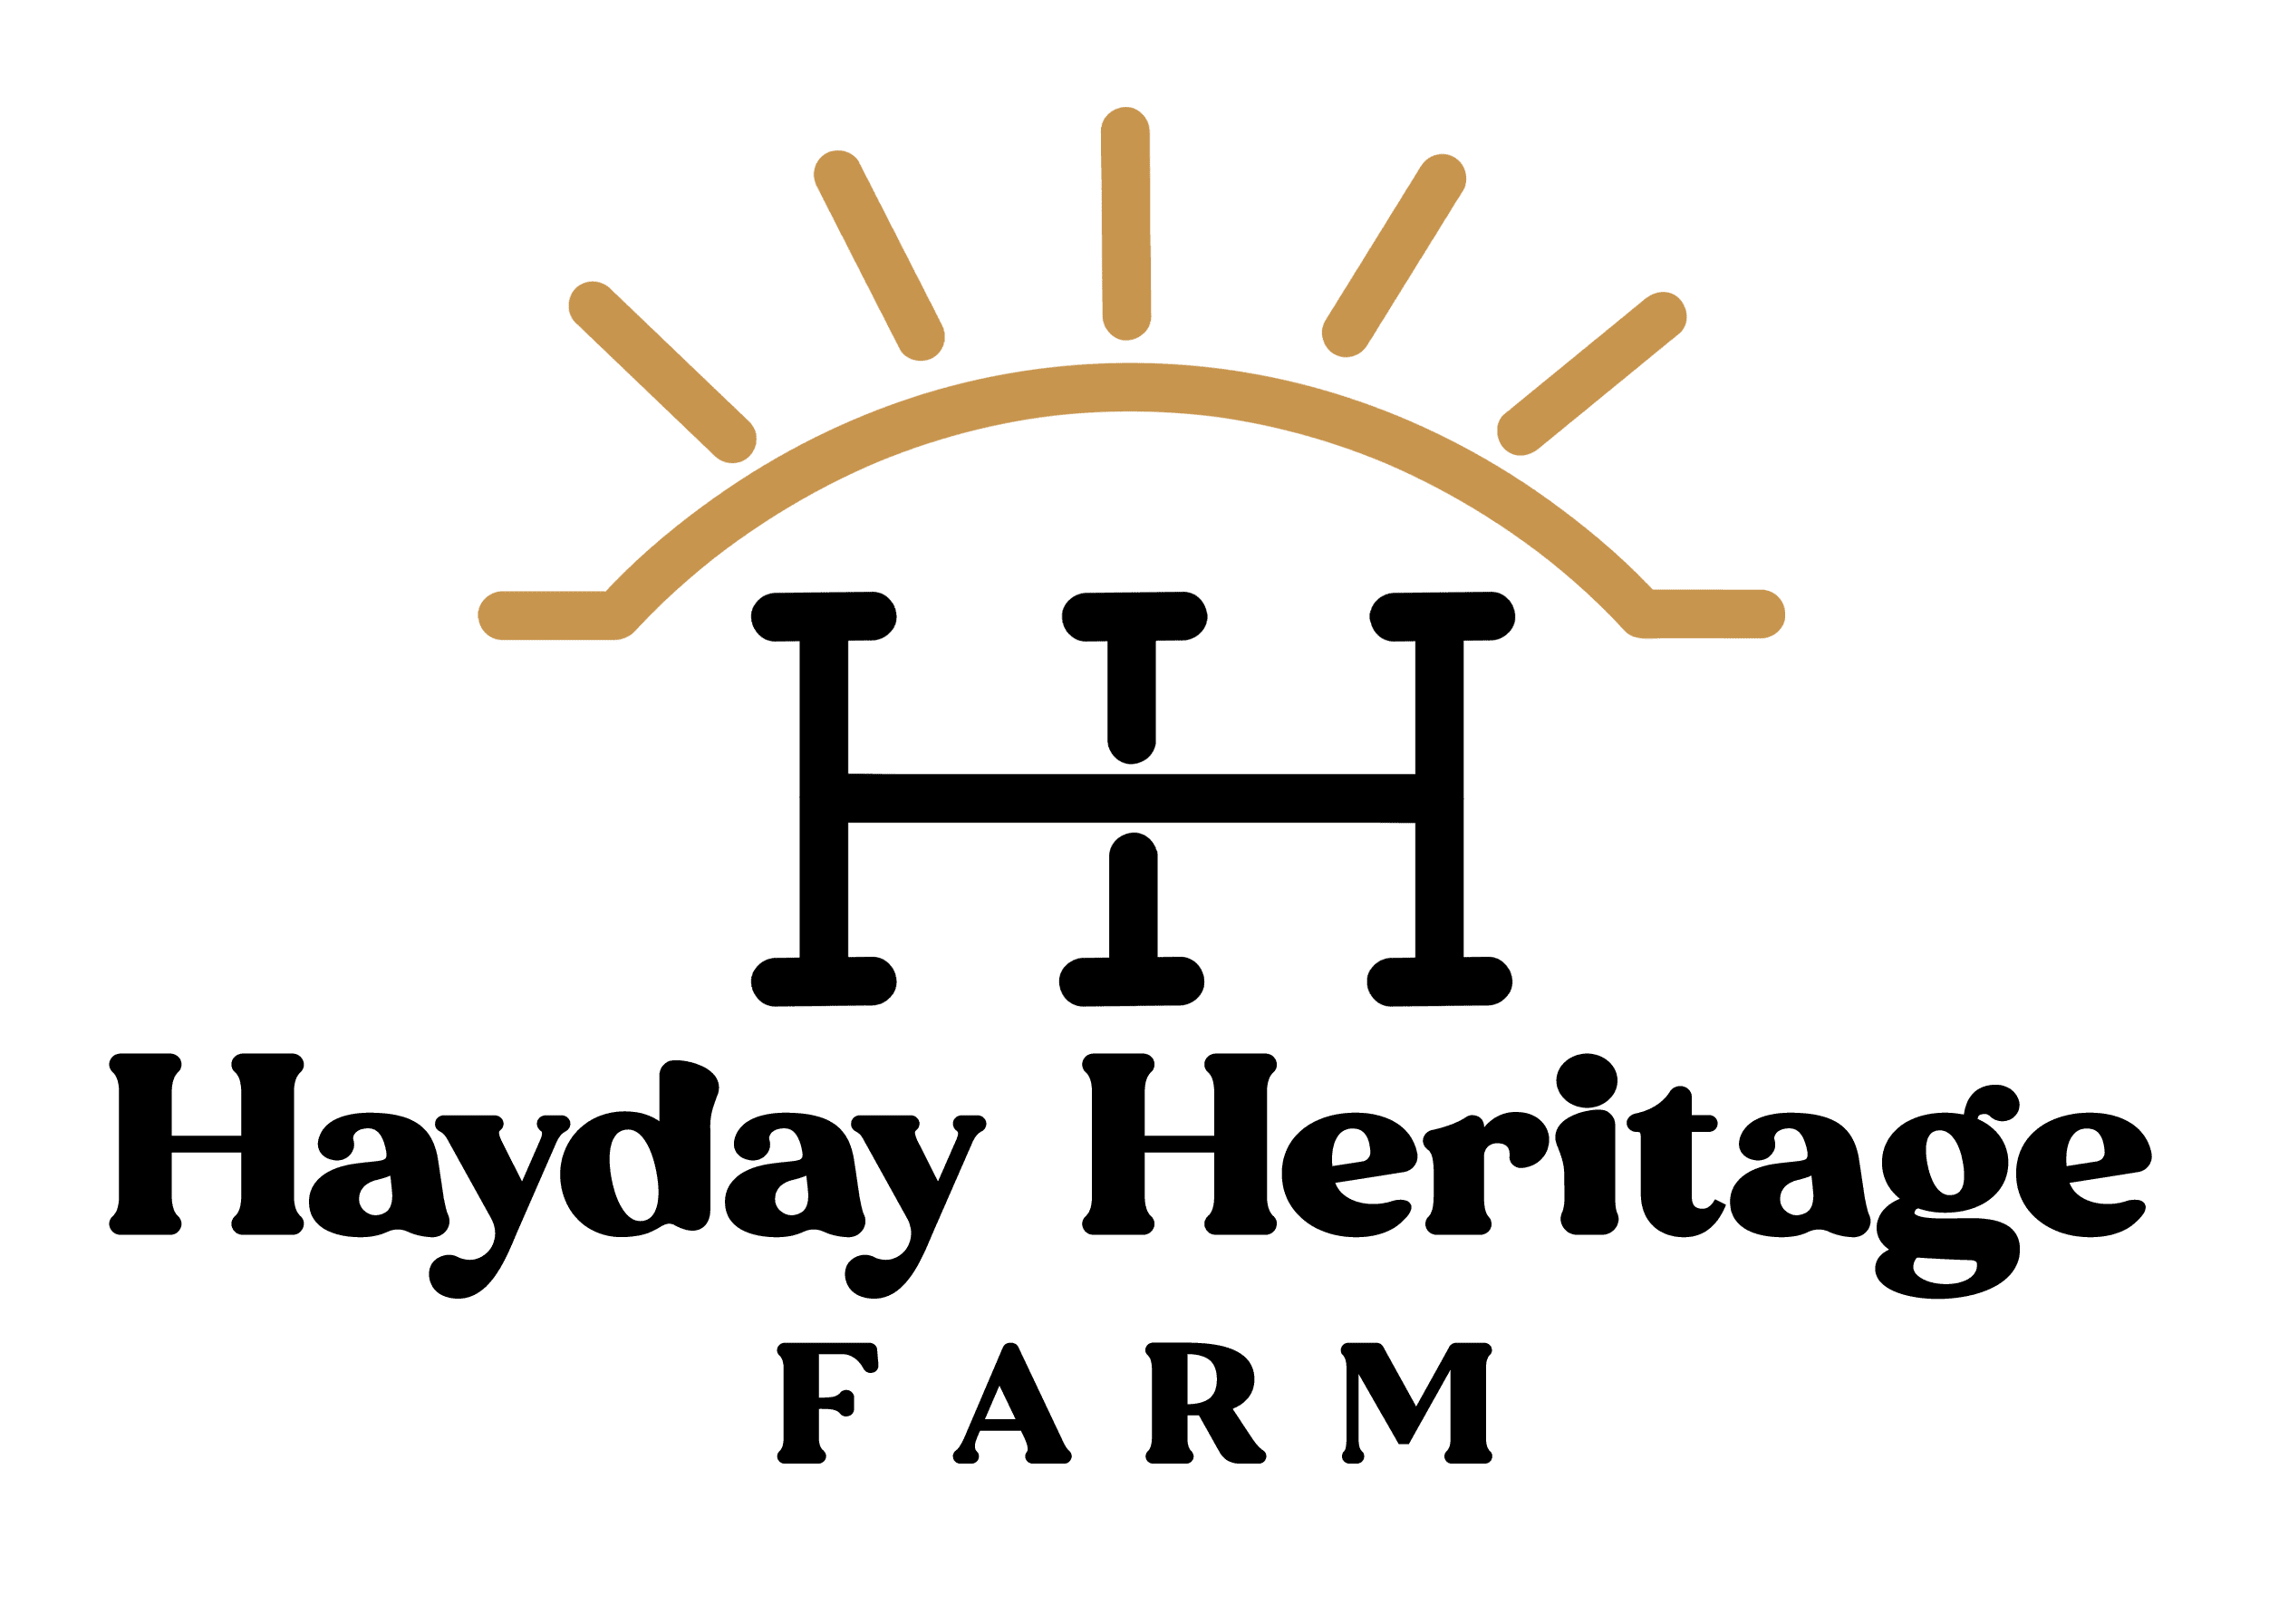 Hayday Heritage Farm